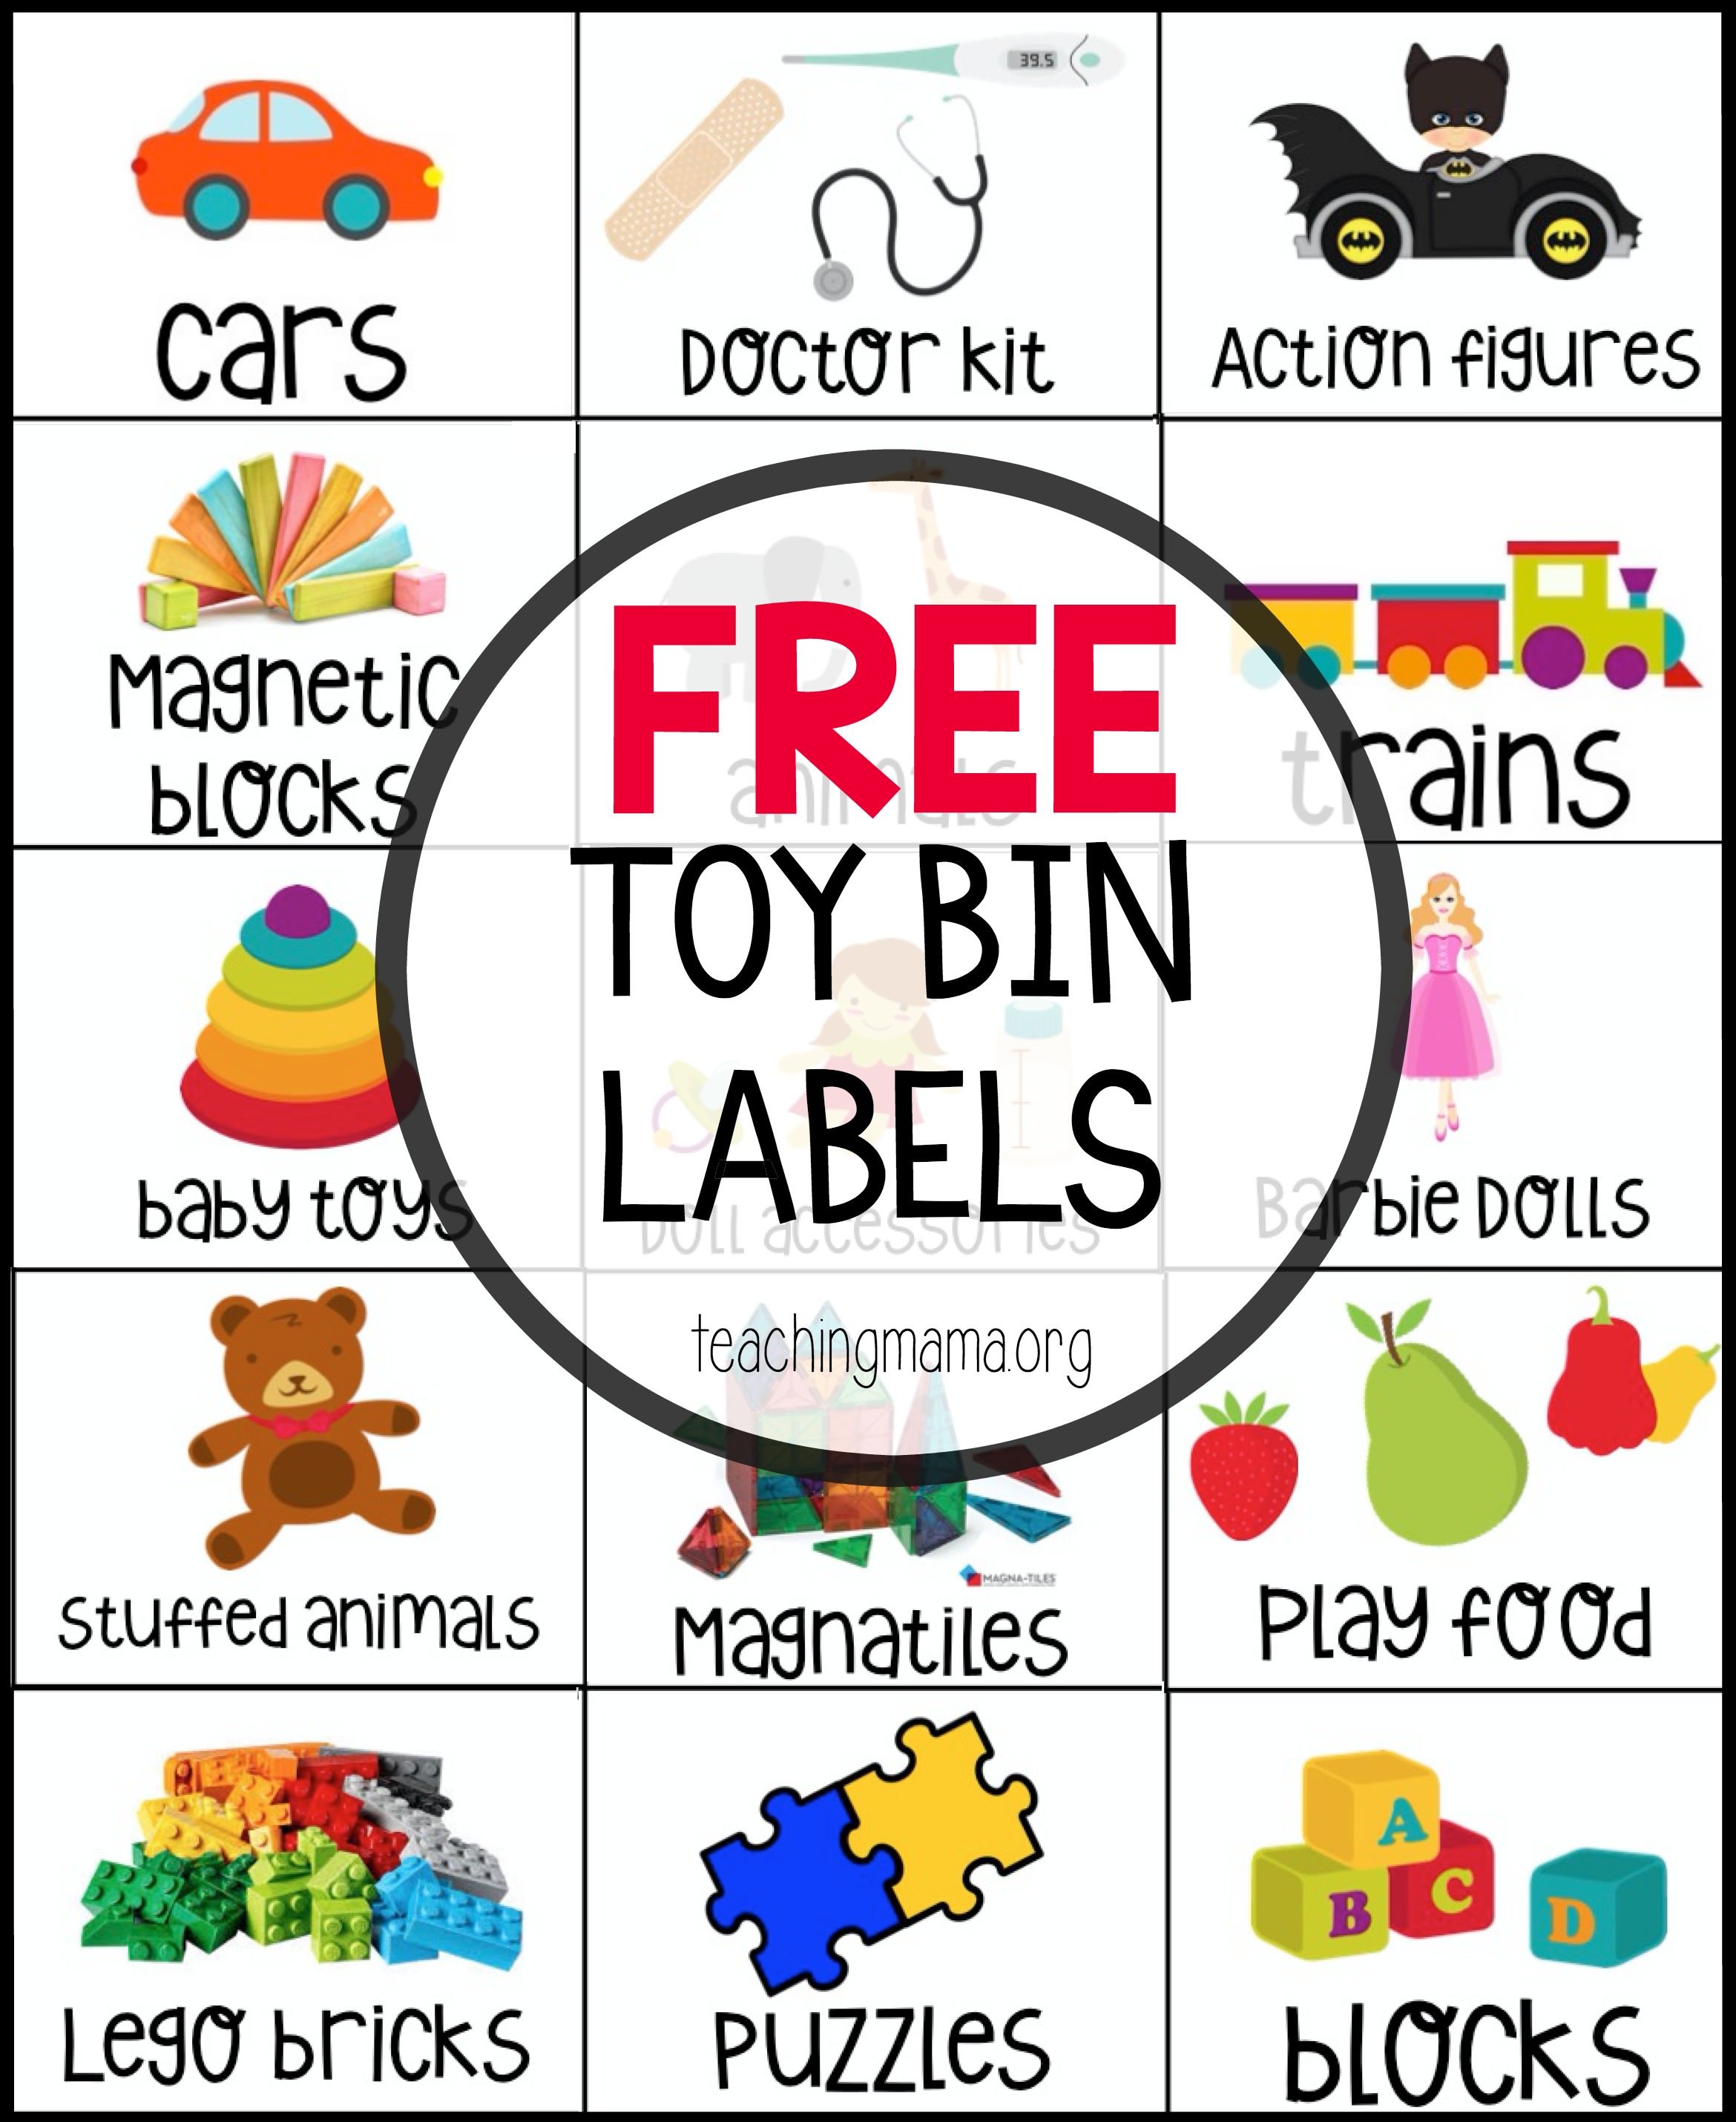 free-toy-bin-lables